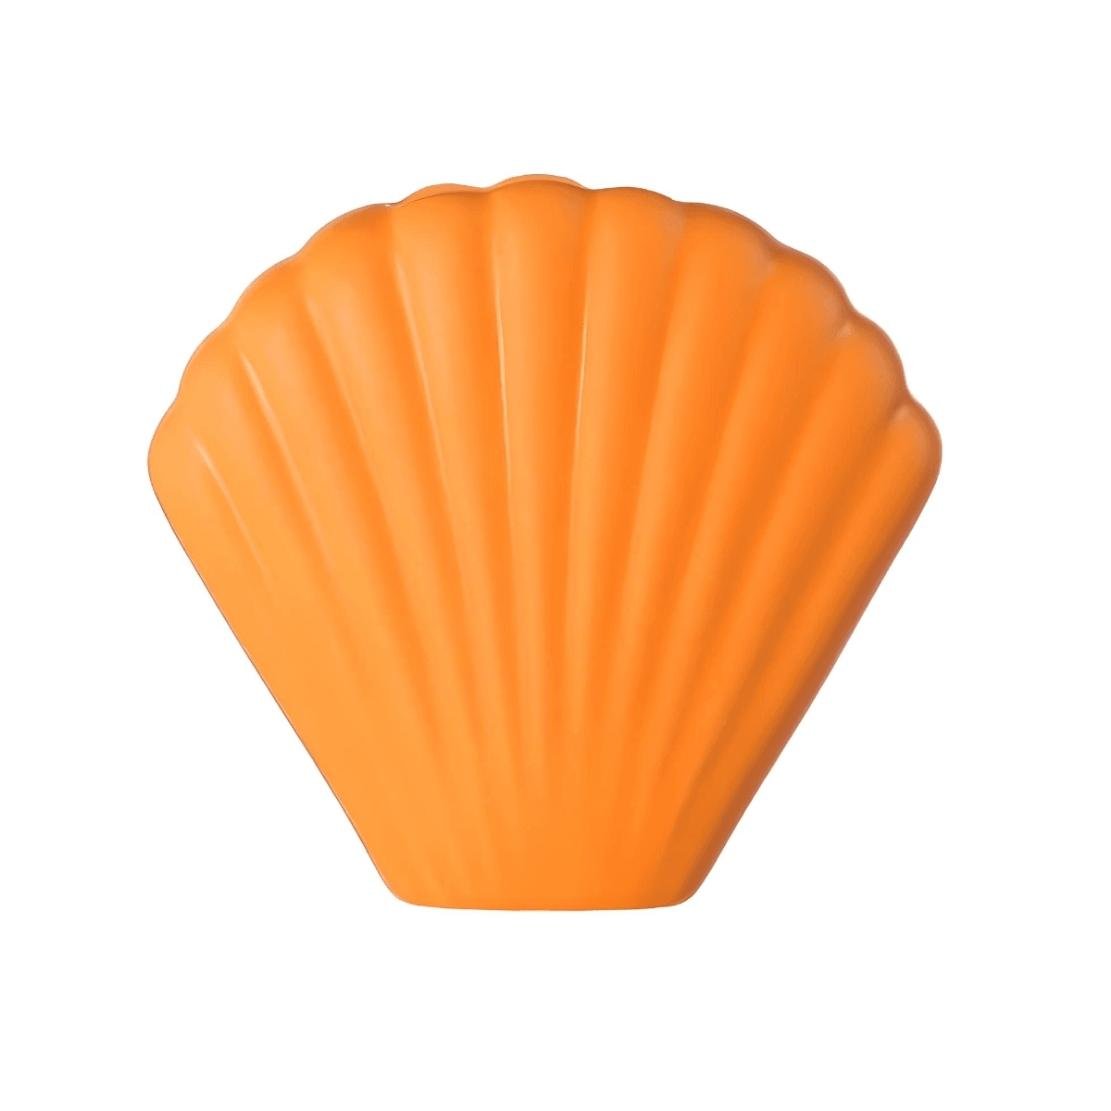 Orange ceramic shell vase